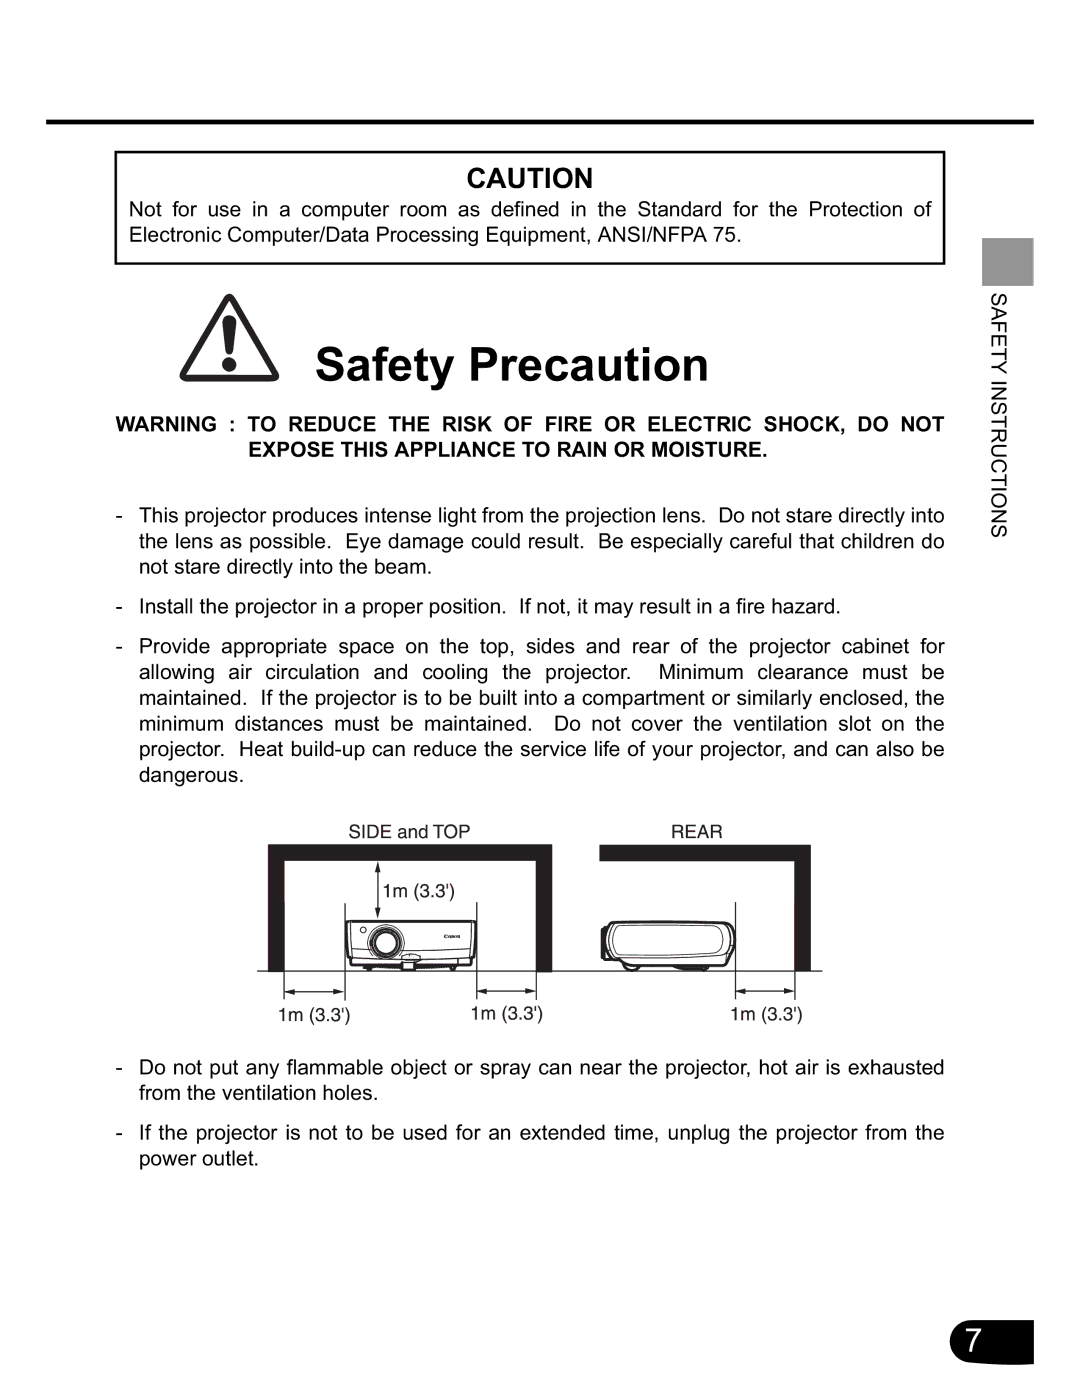 Canon SX20 manual Safety Precaution 